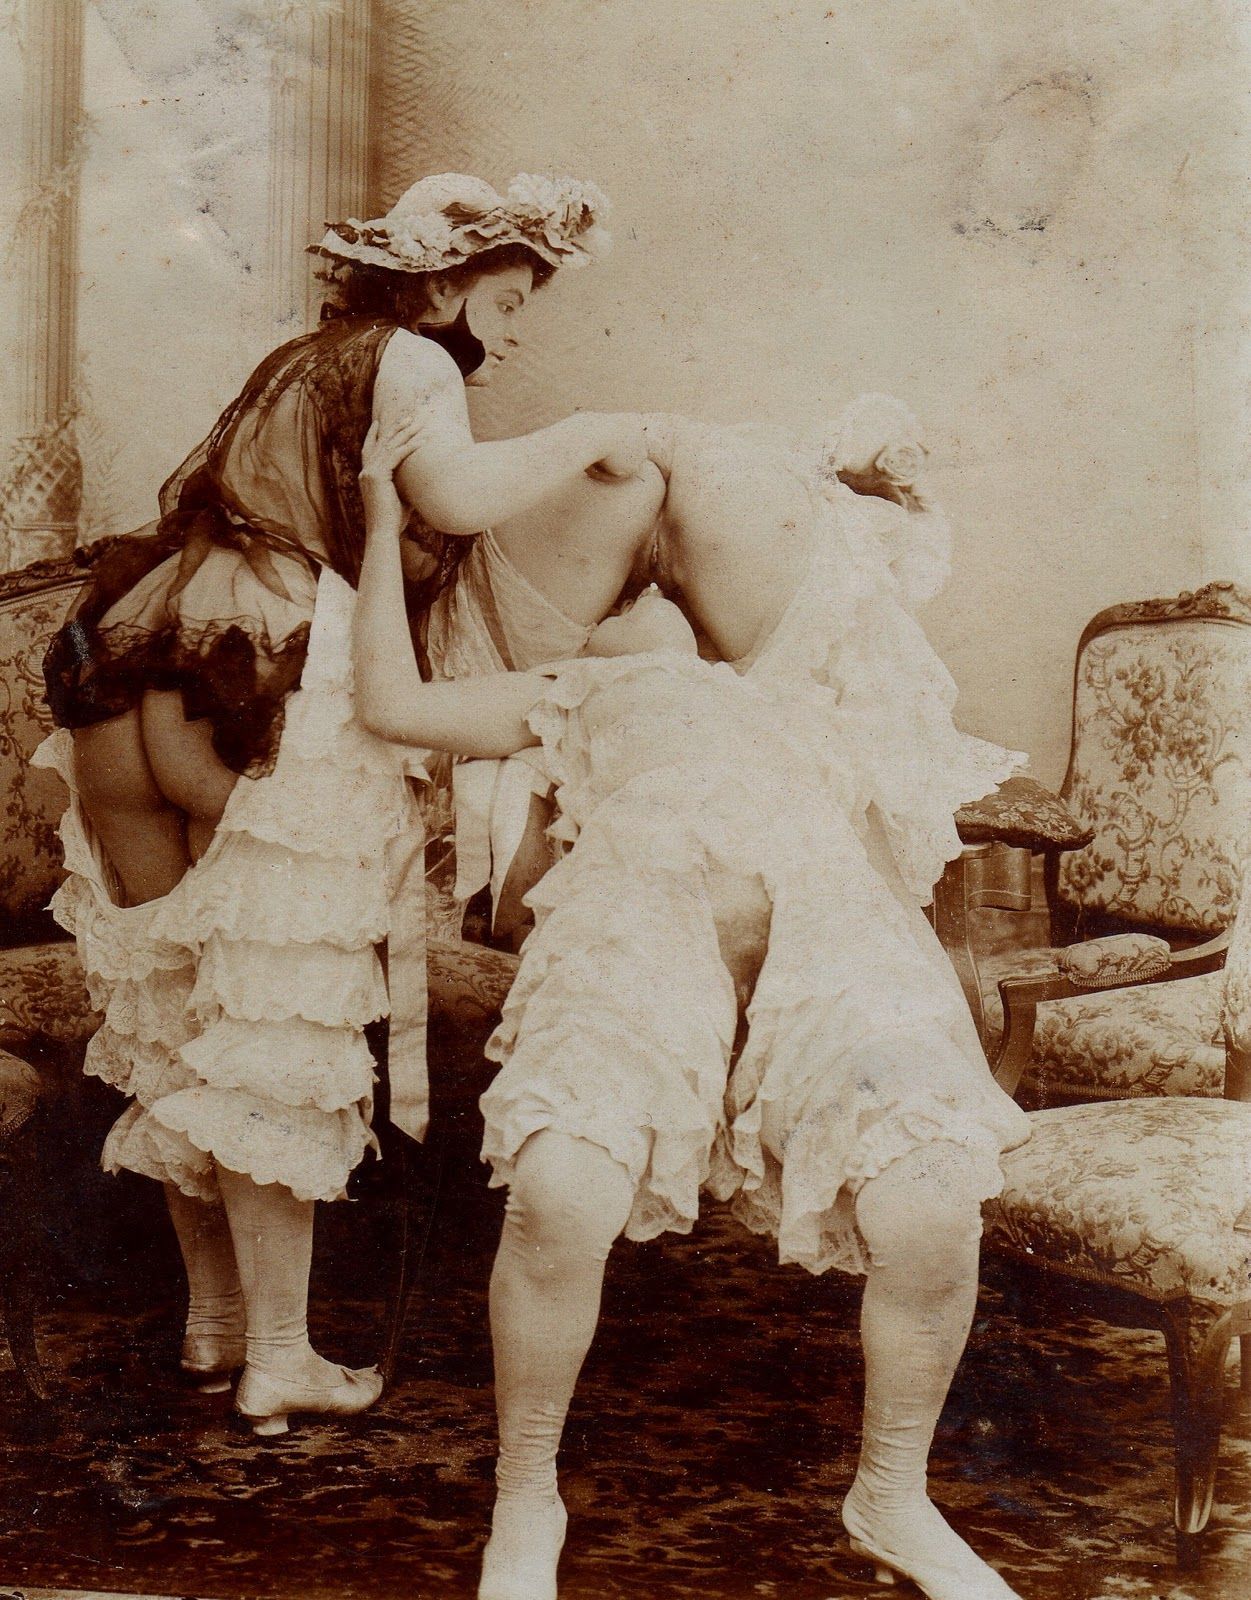 Erotic victorian images